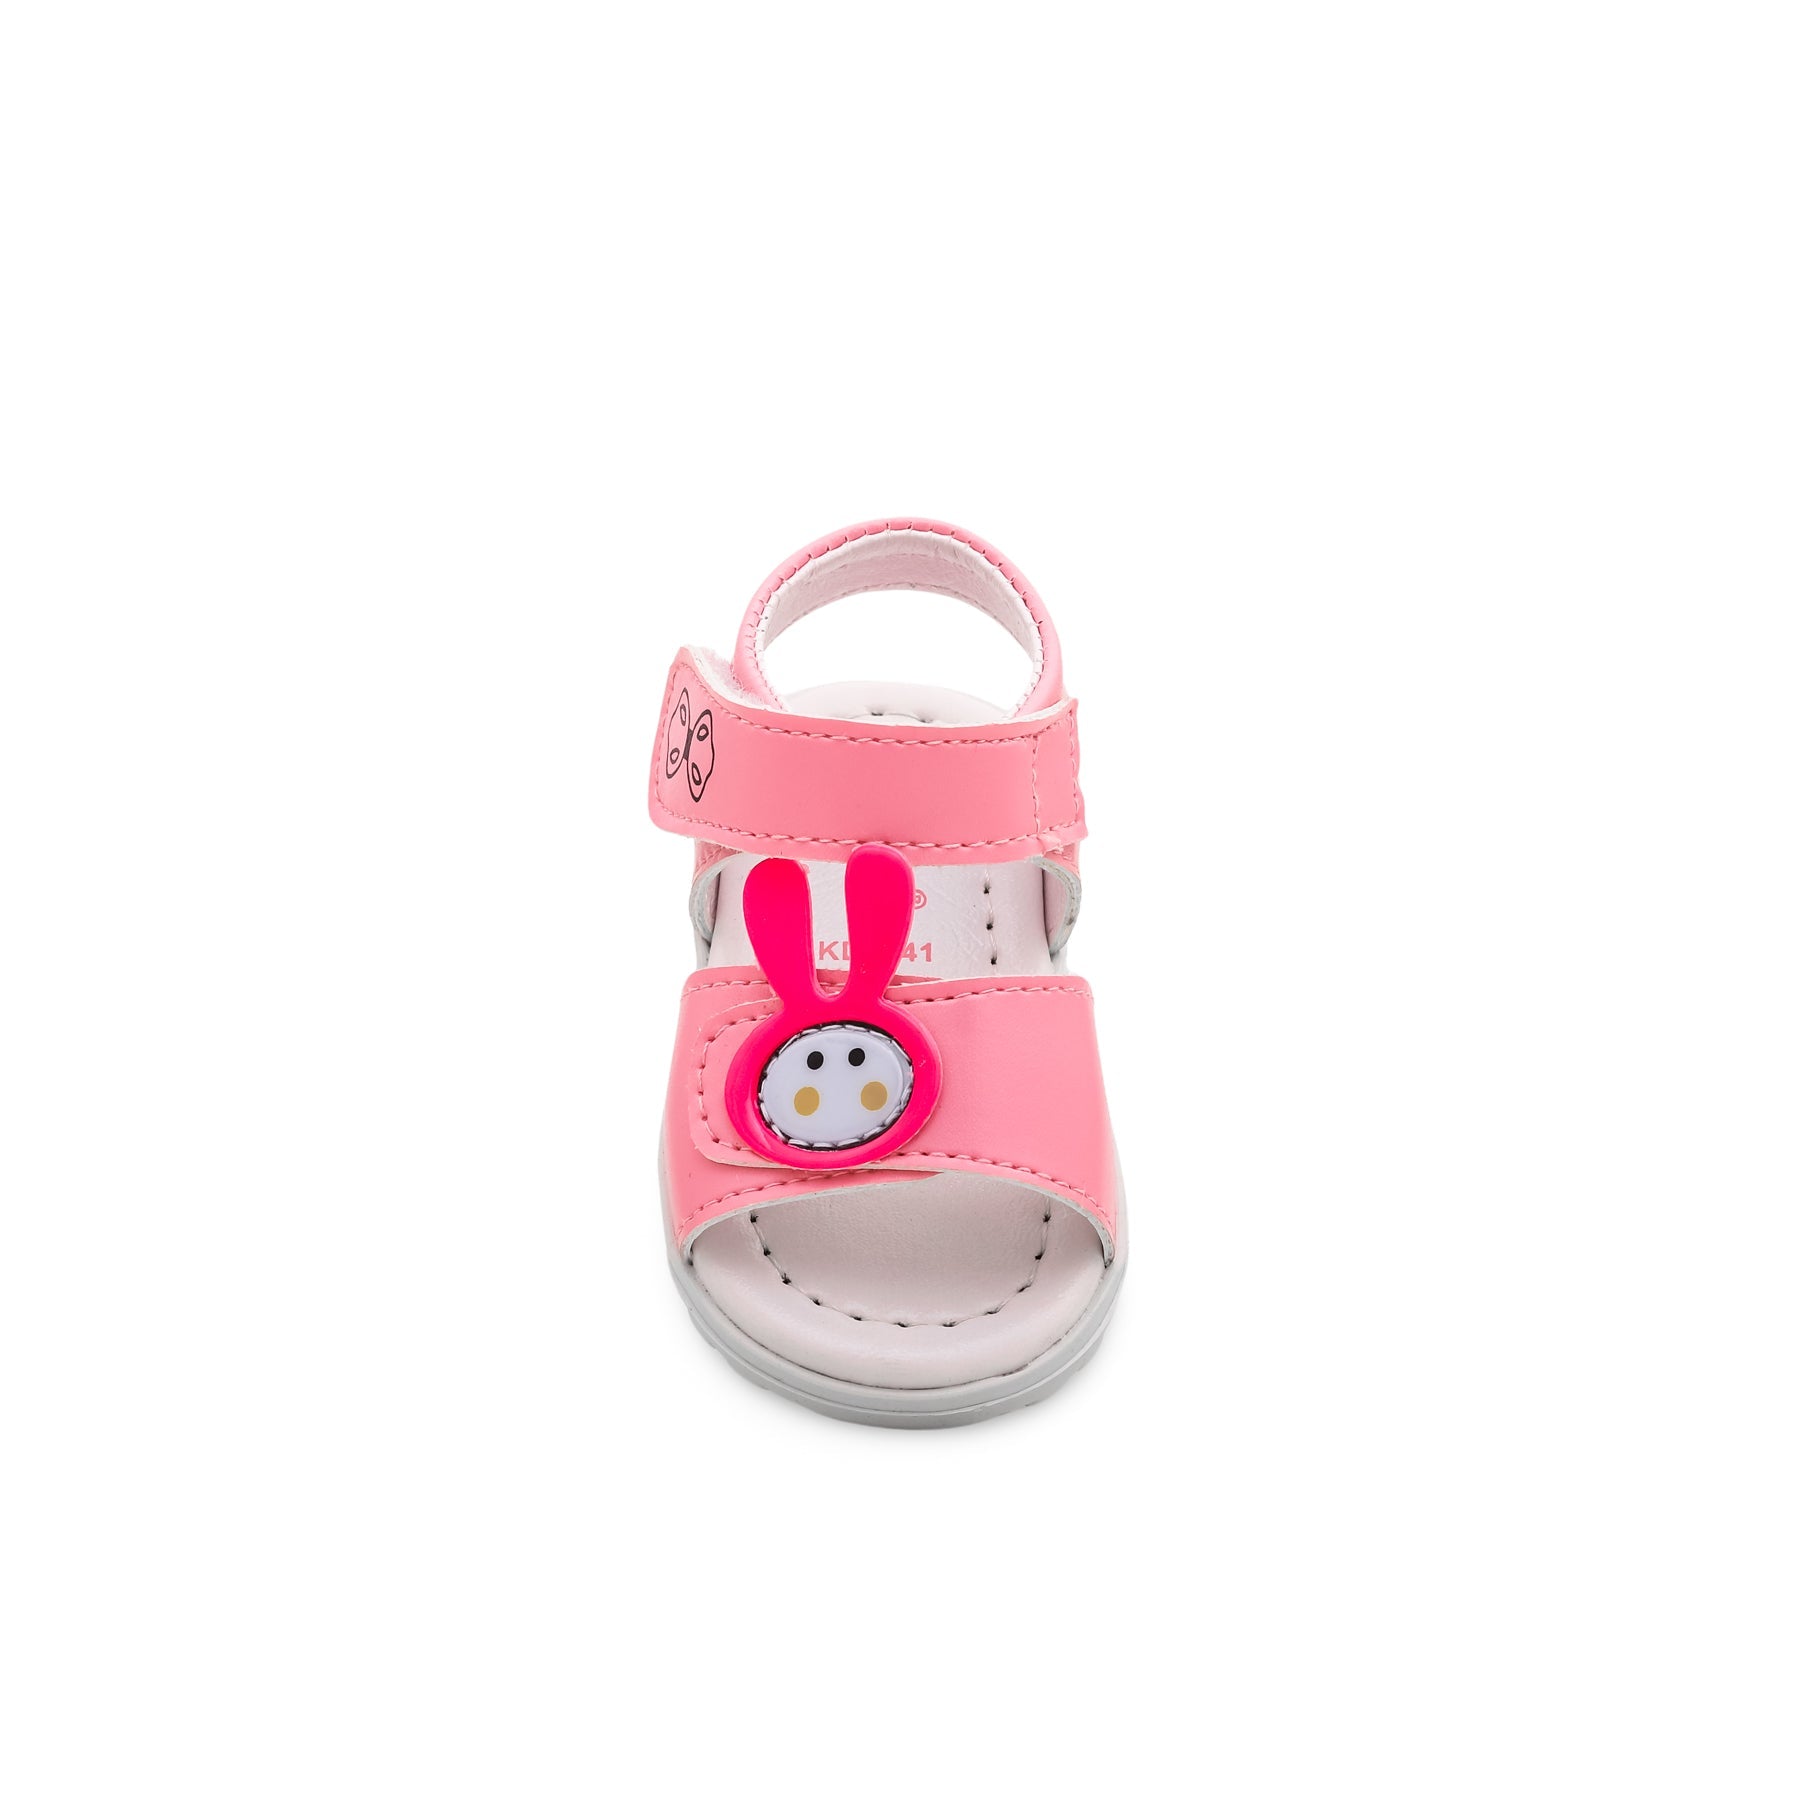 Babies Pink Casual Sandal KD7941